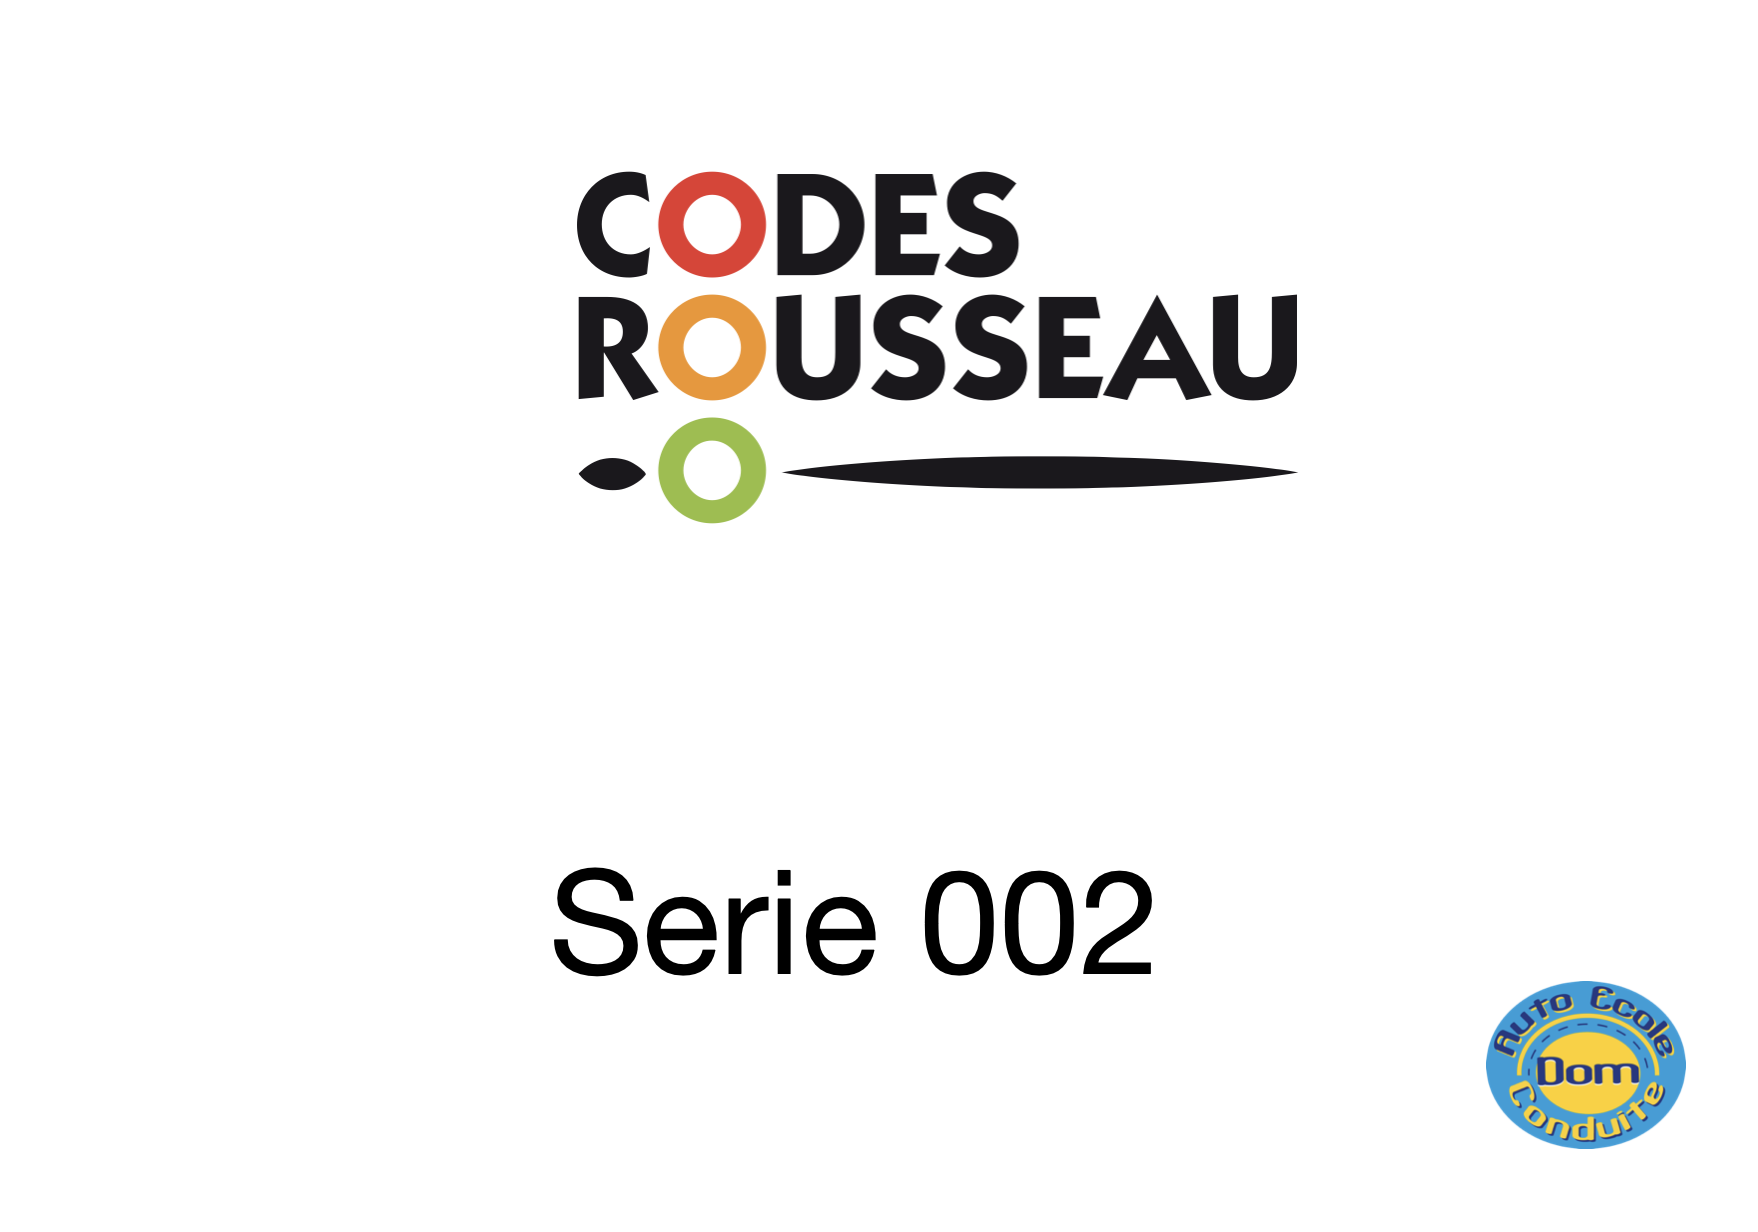 serie codes rousseau 001 test